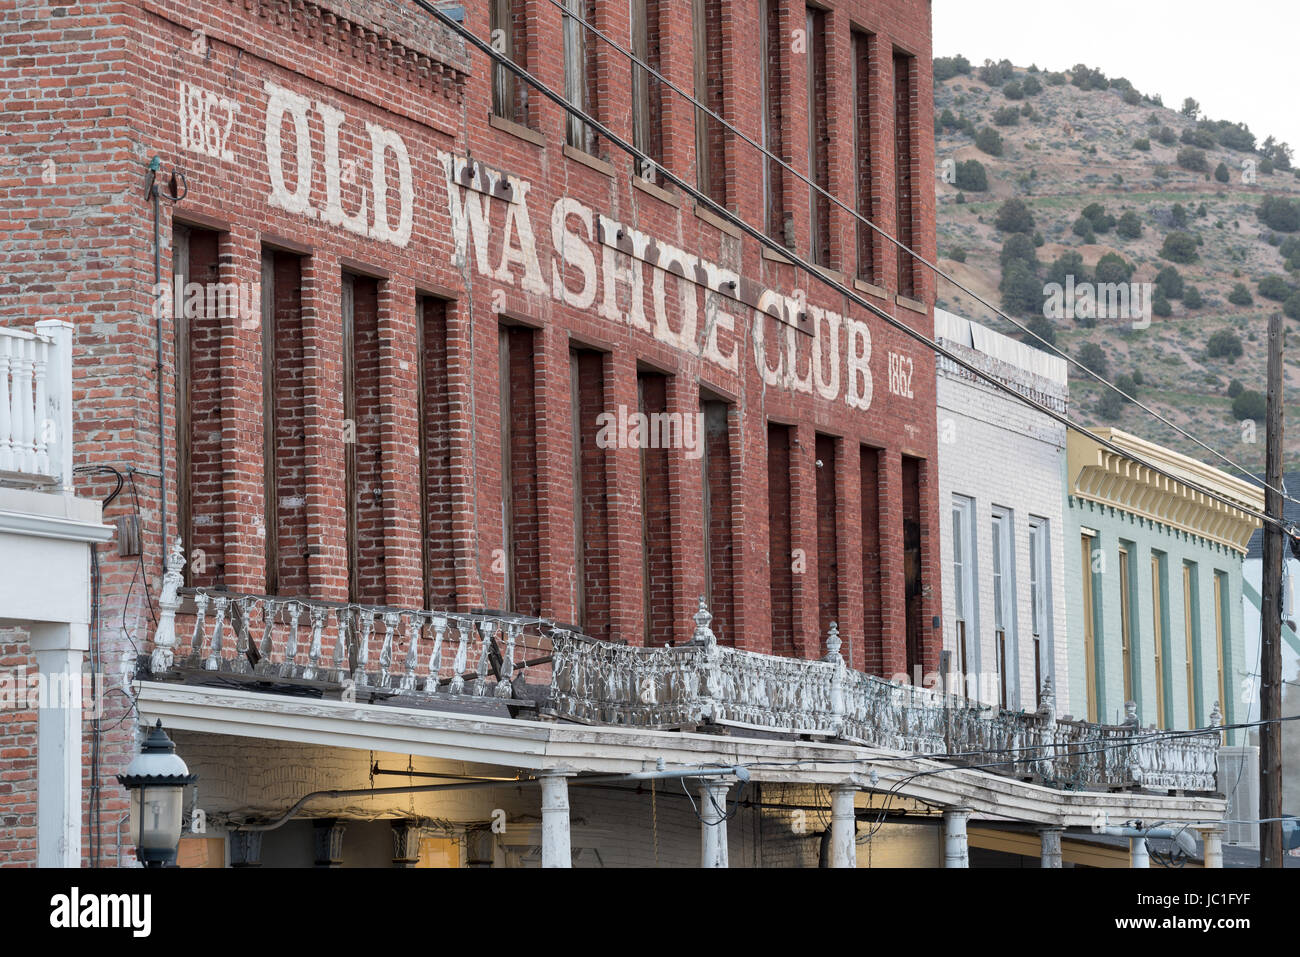 The historic Old Washoe Club tavern in Virginia City, Nevada. Stock Photo